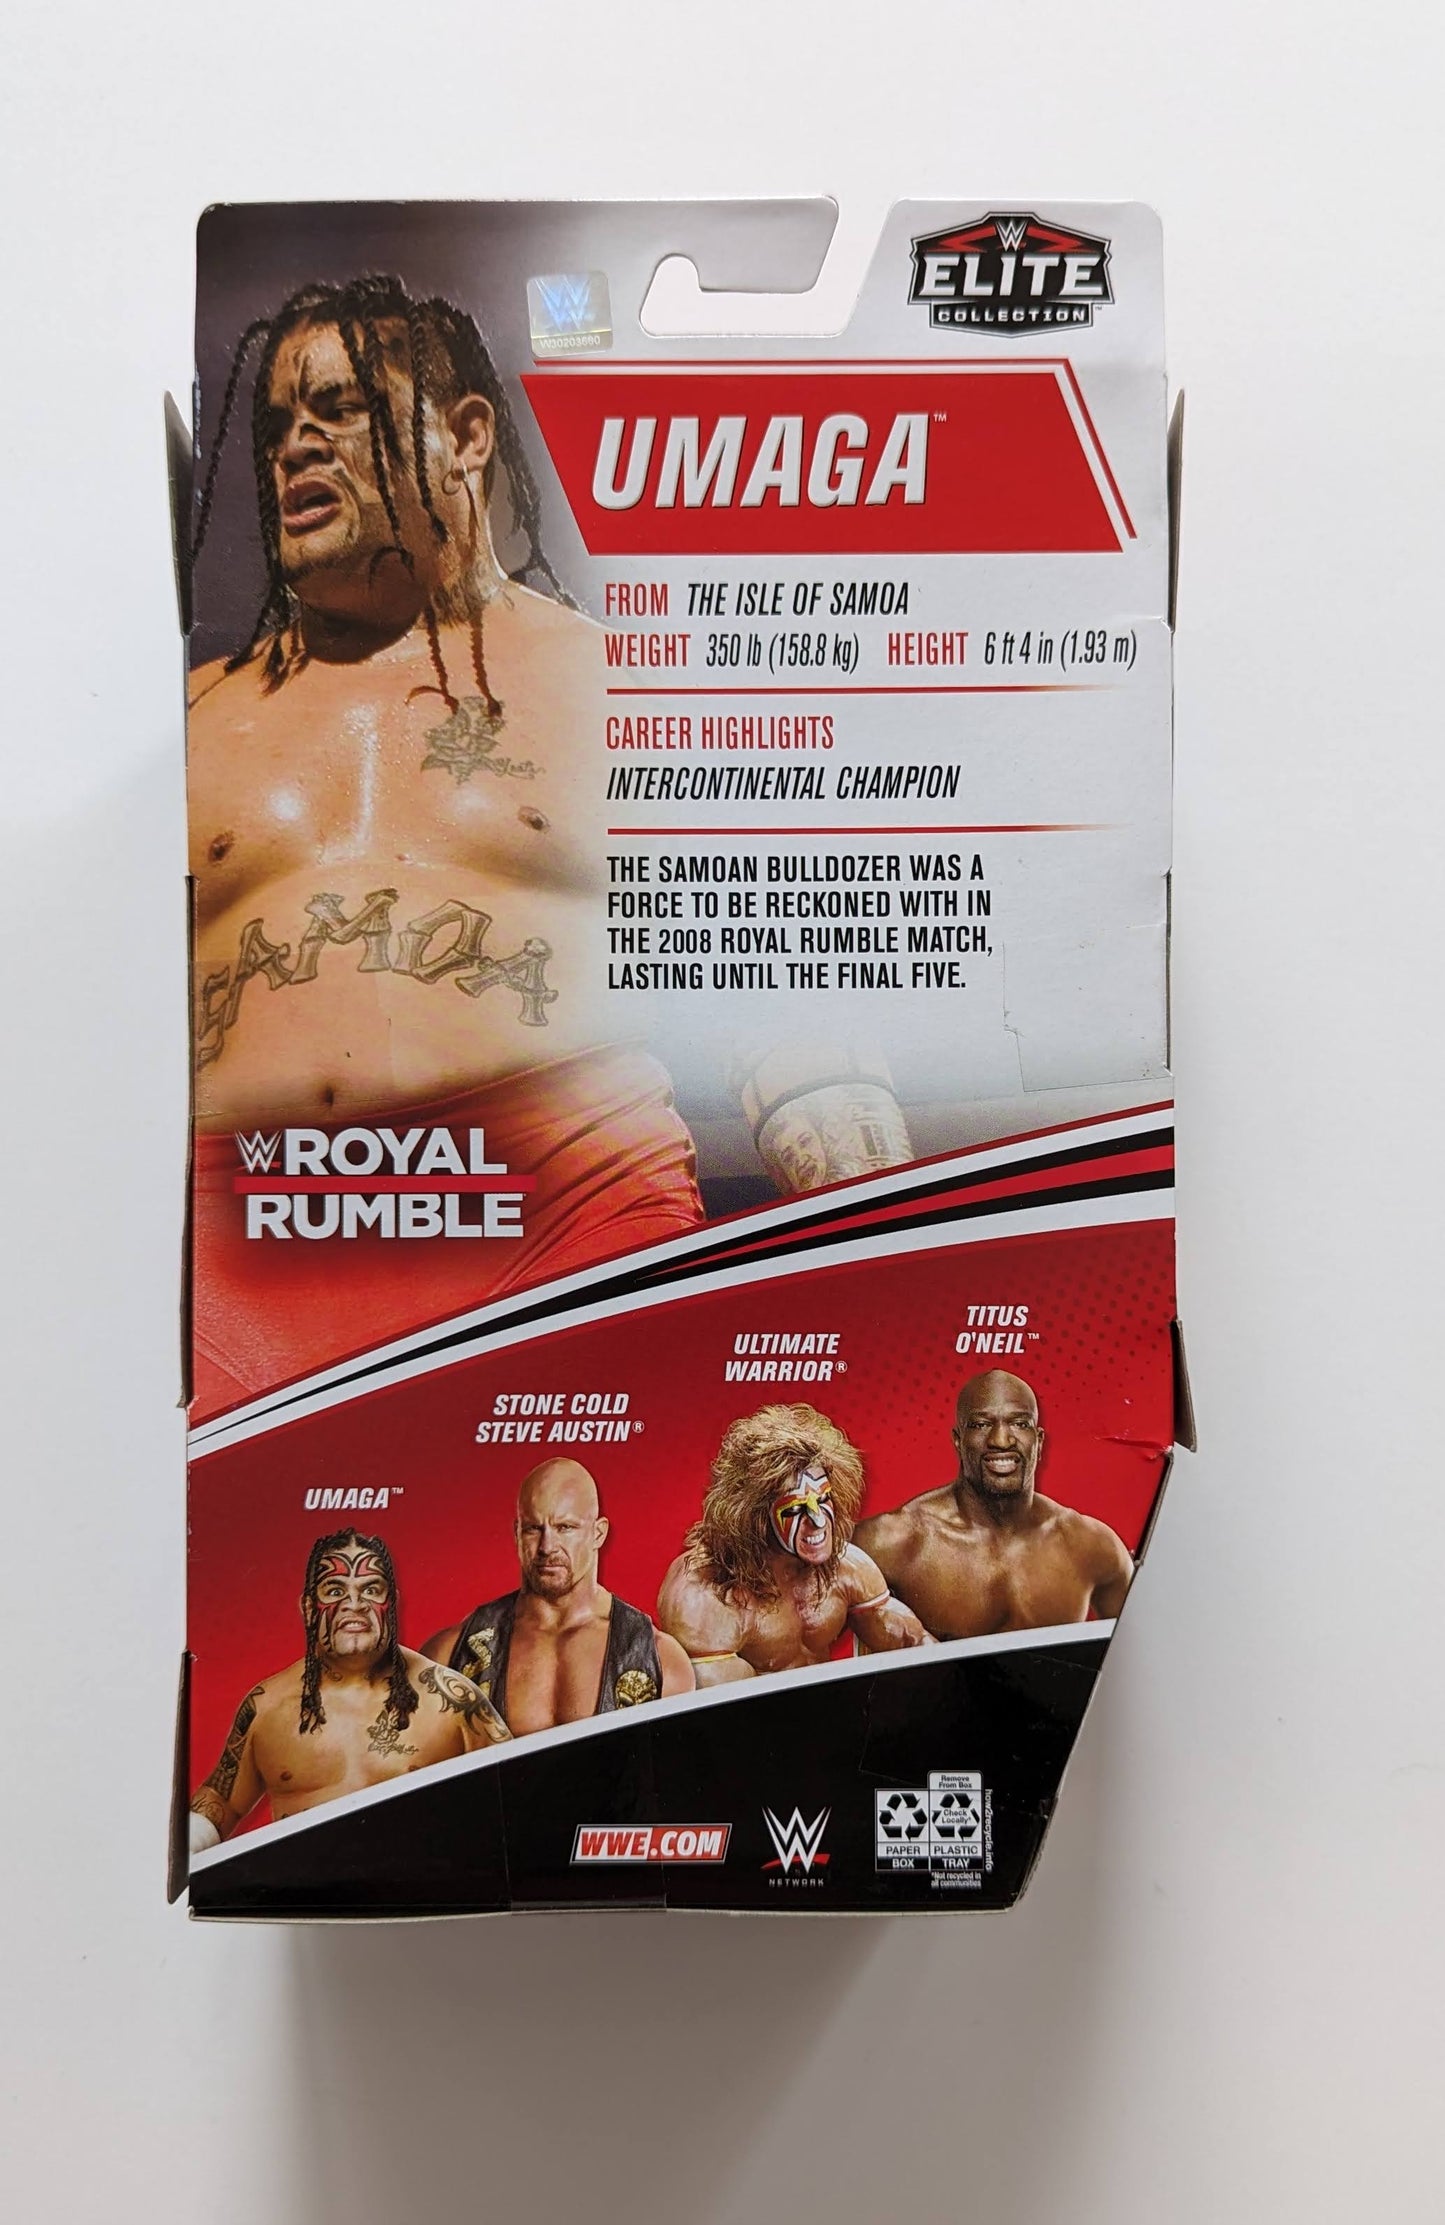 2021 WWE Mattel Elite Collection Royal Rumble Series 2 Umaga [Exclusive]